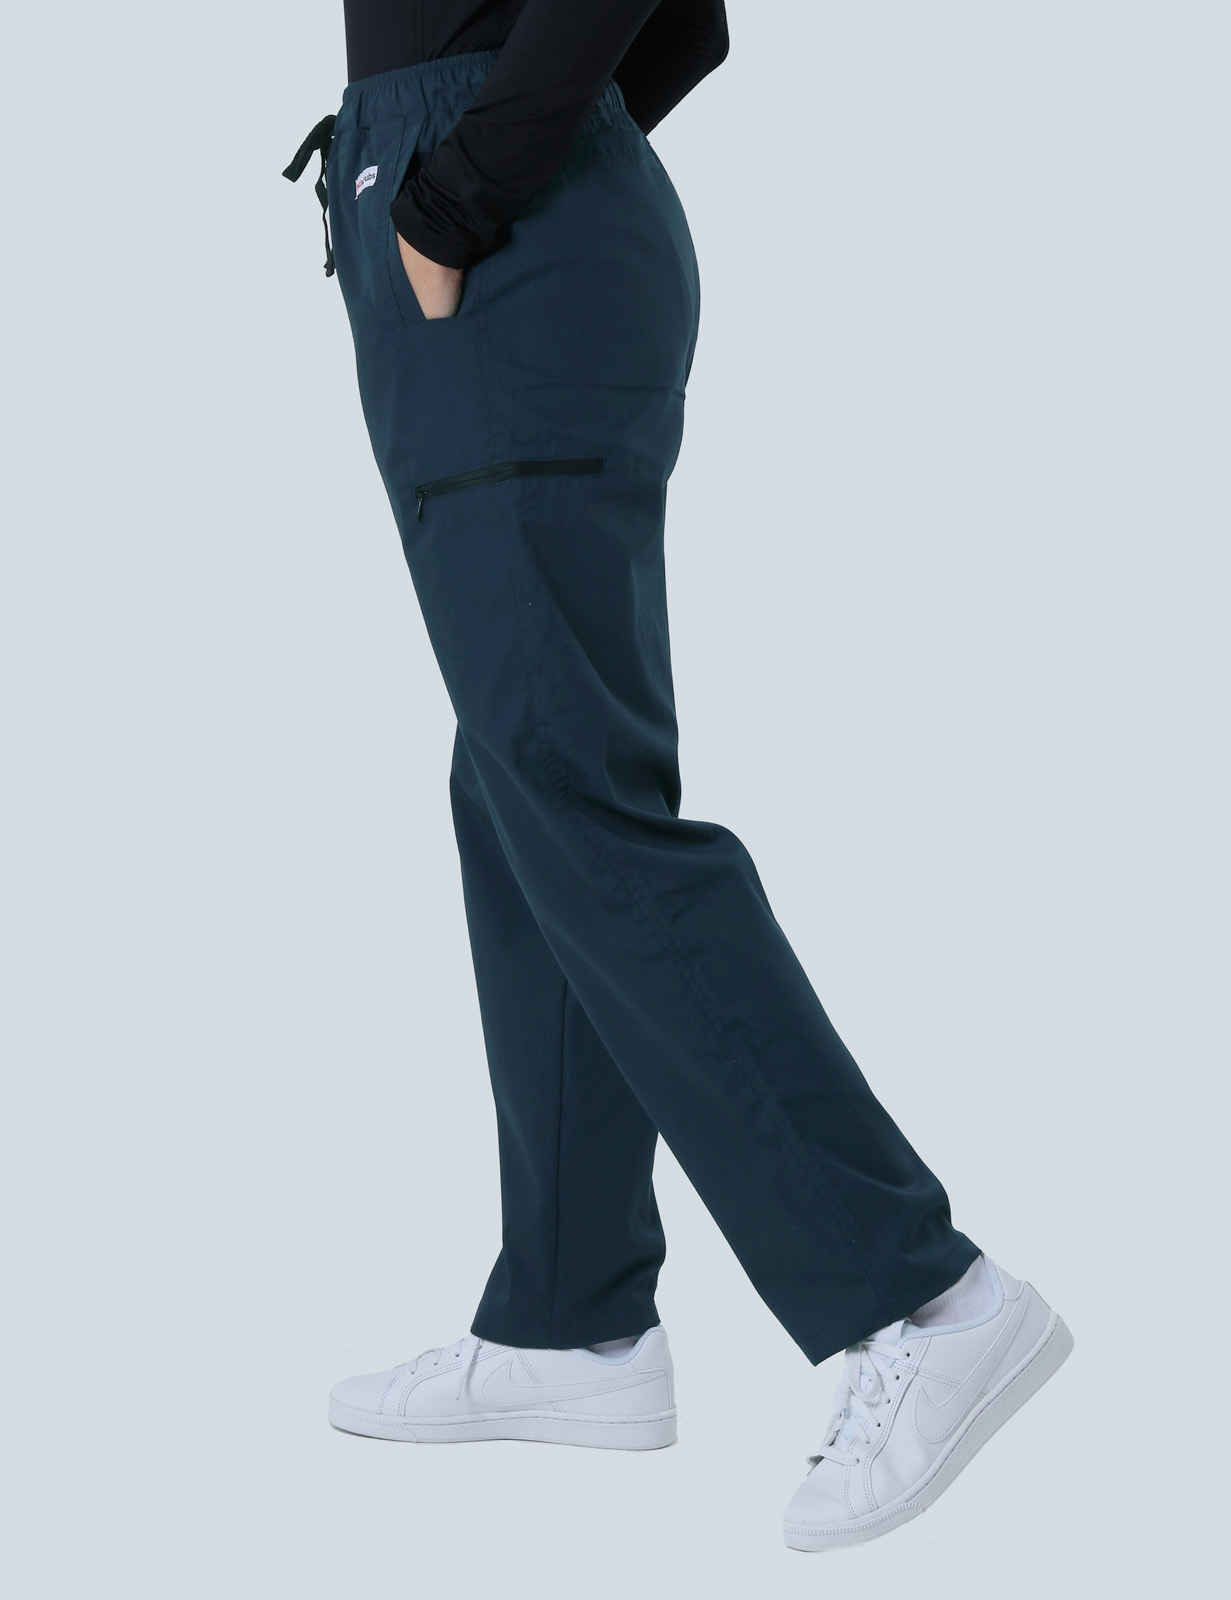 Women's Utility Pants - Navy - 4X large